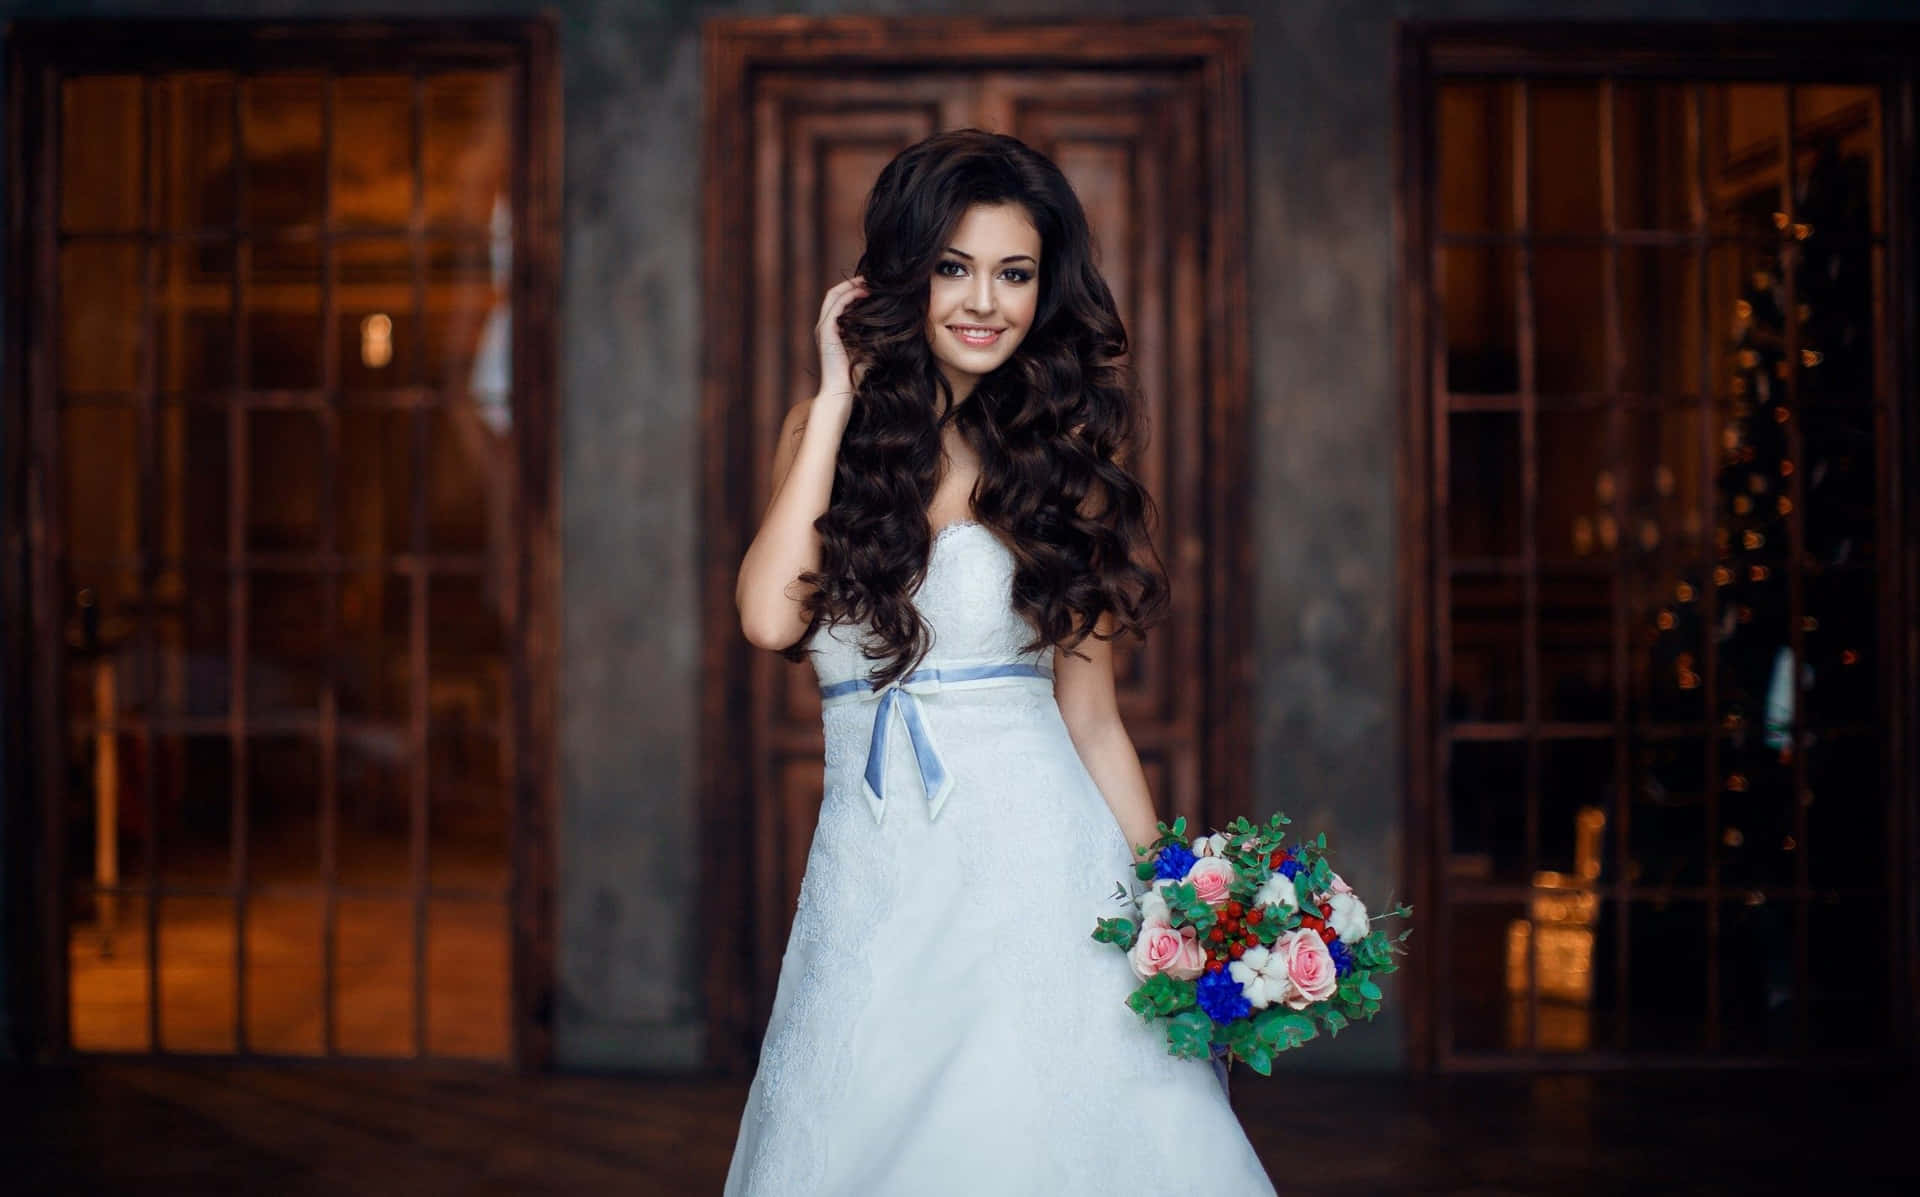 Elegant Bride Posing in a Stunning Wedding Dress